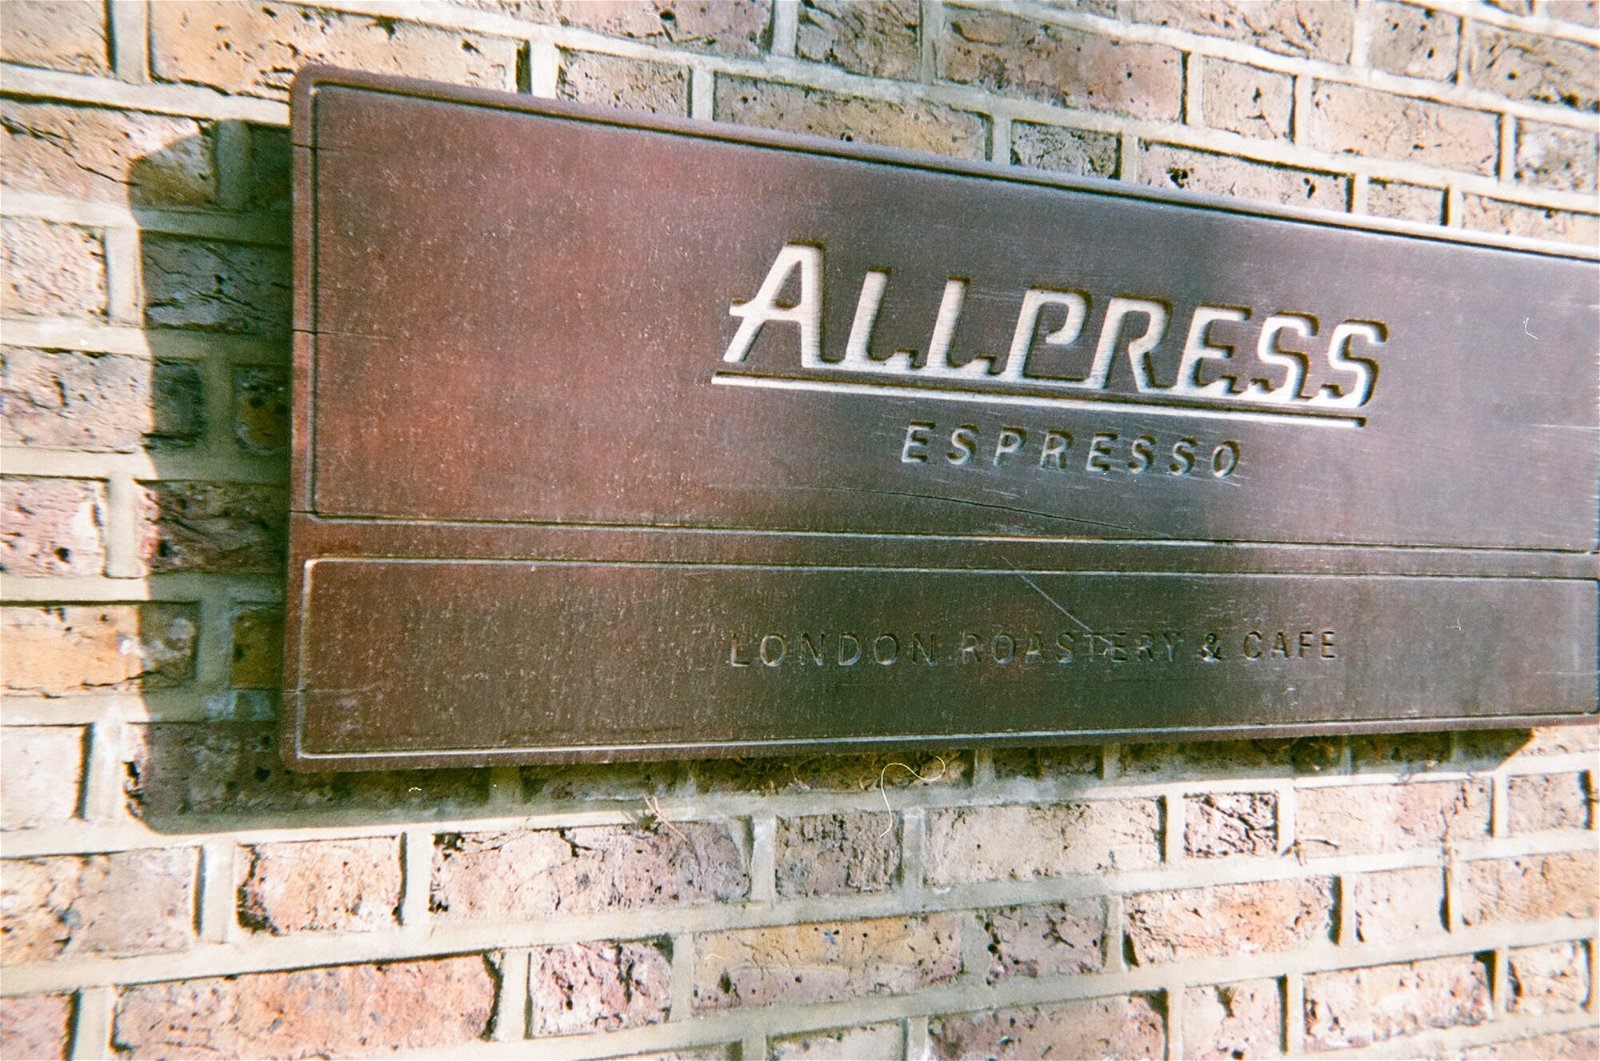 Allpress coffee sign